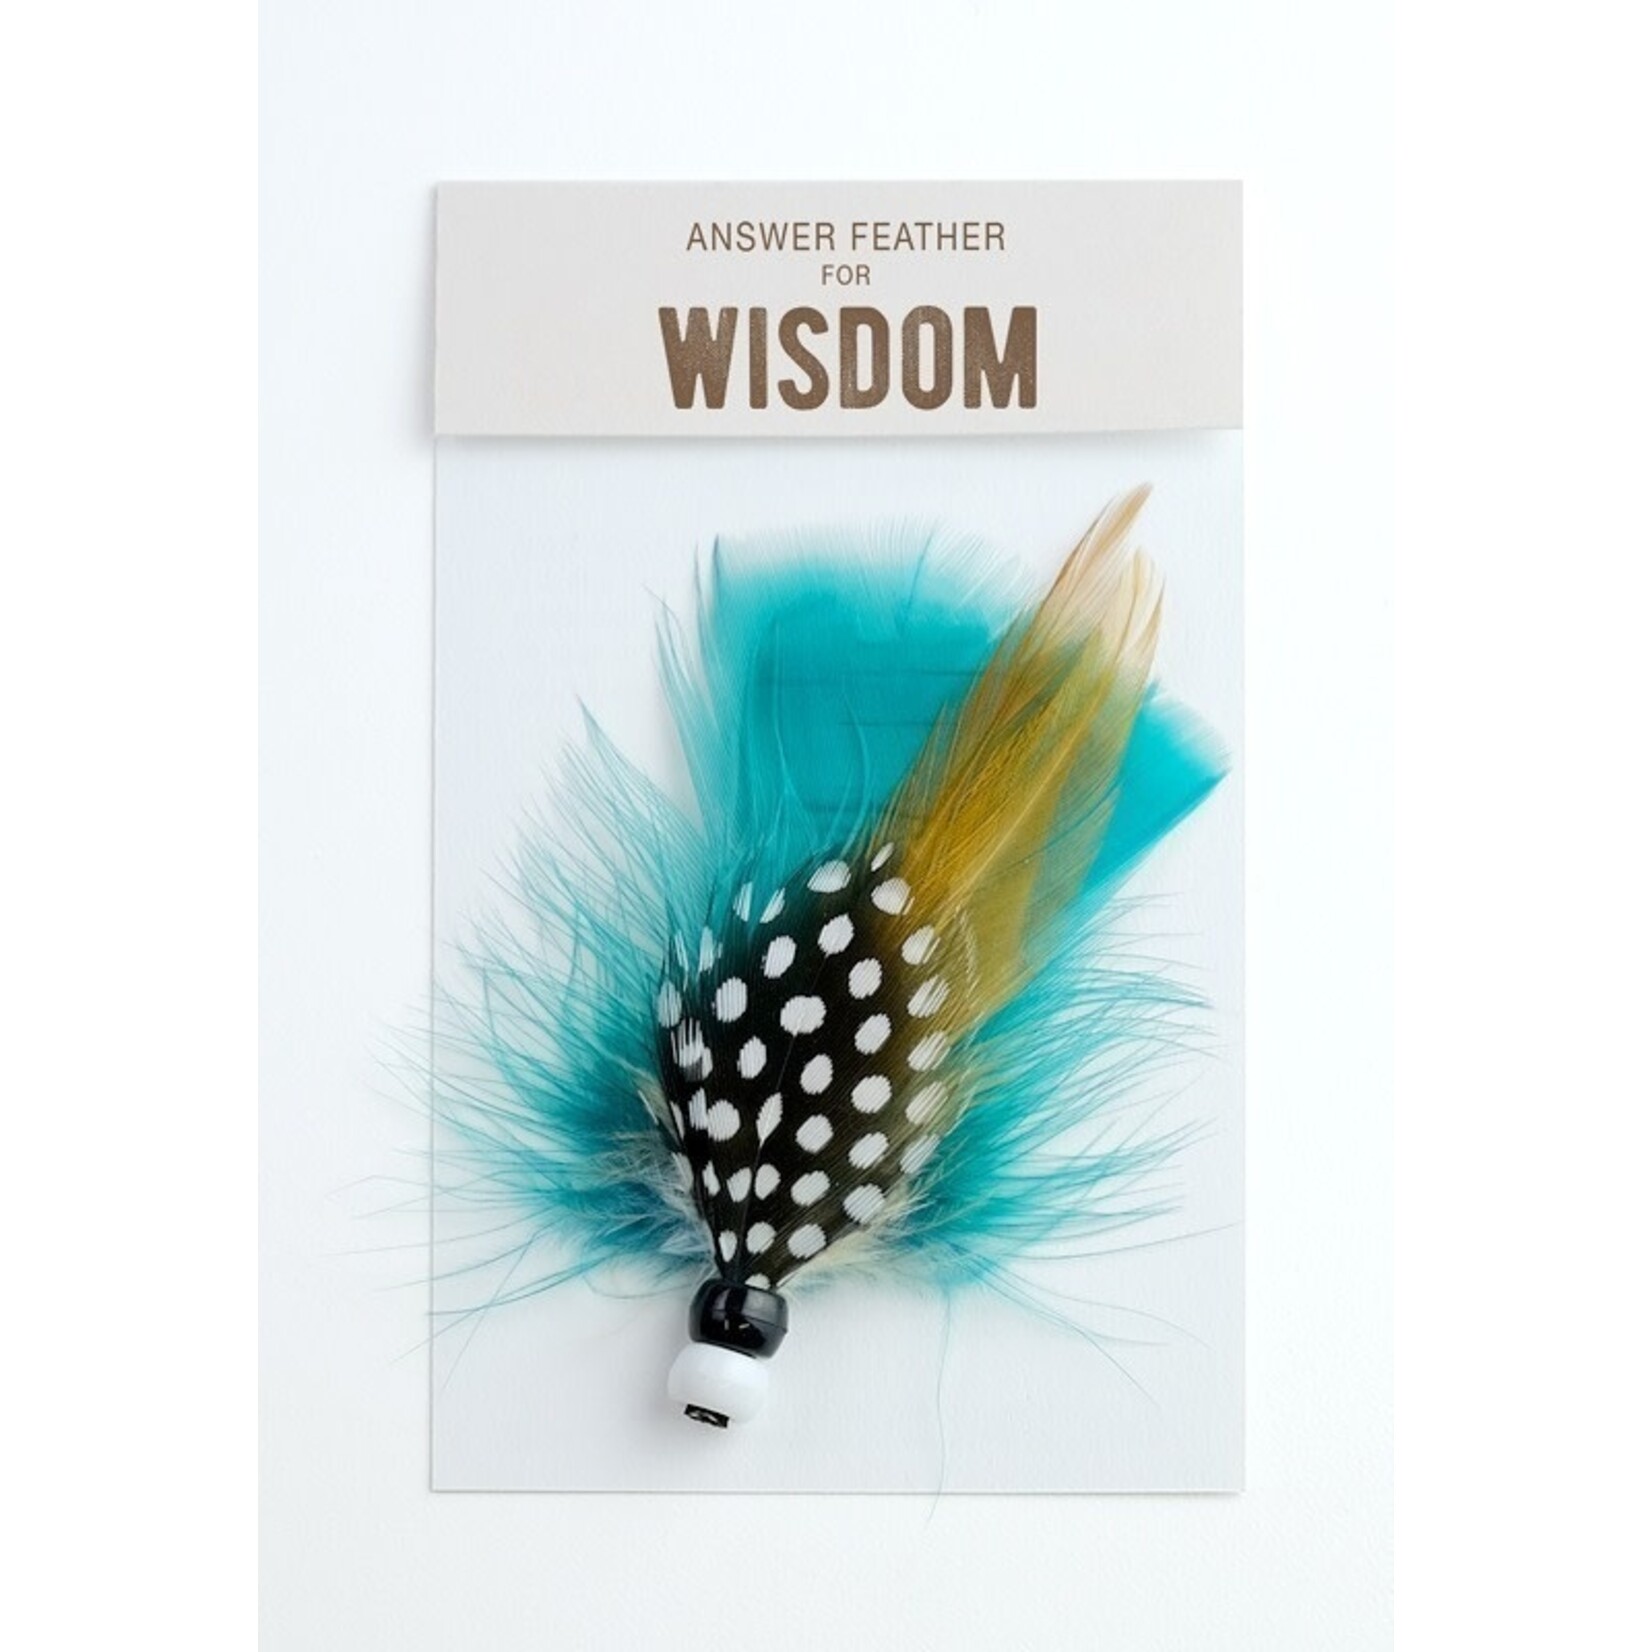 Monague Monague "Wisdom" Answer Feather